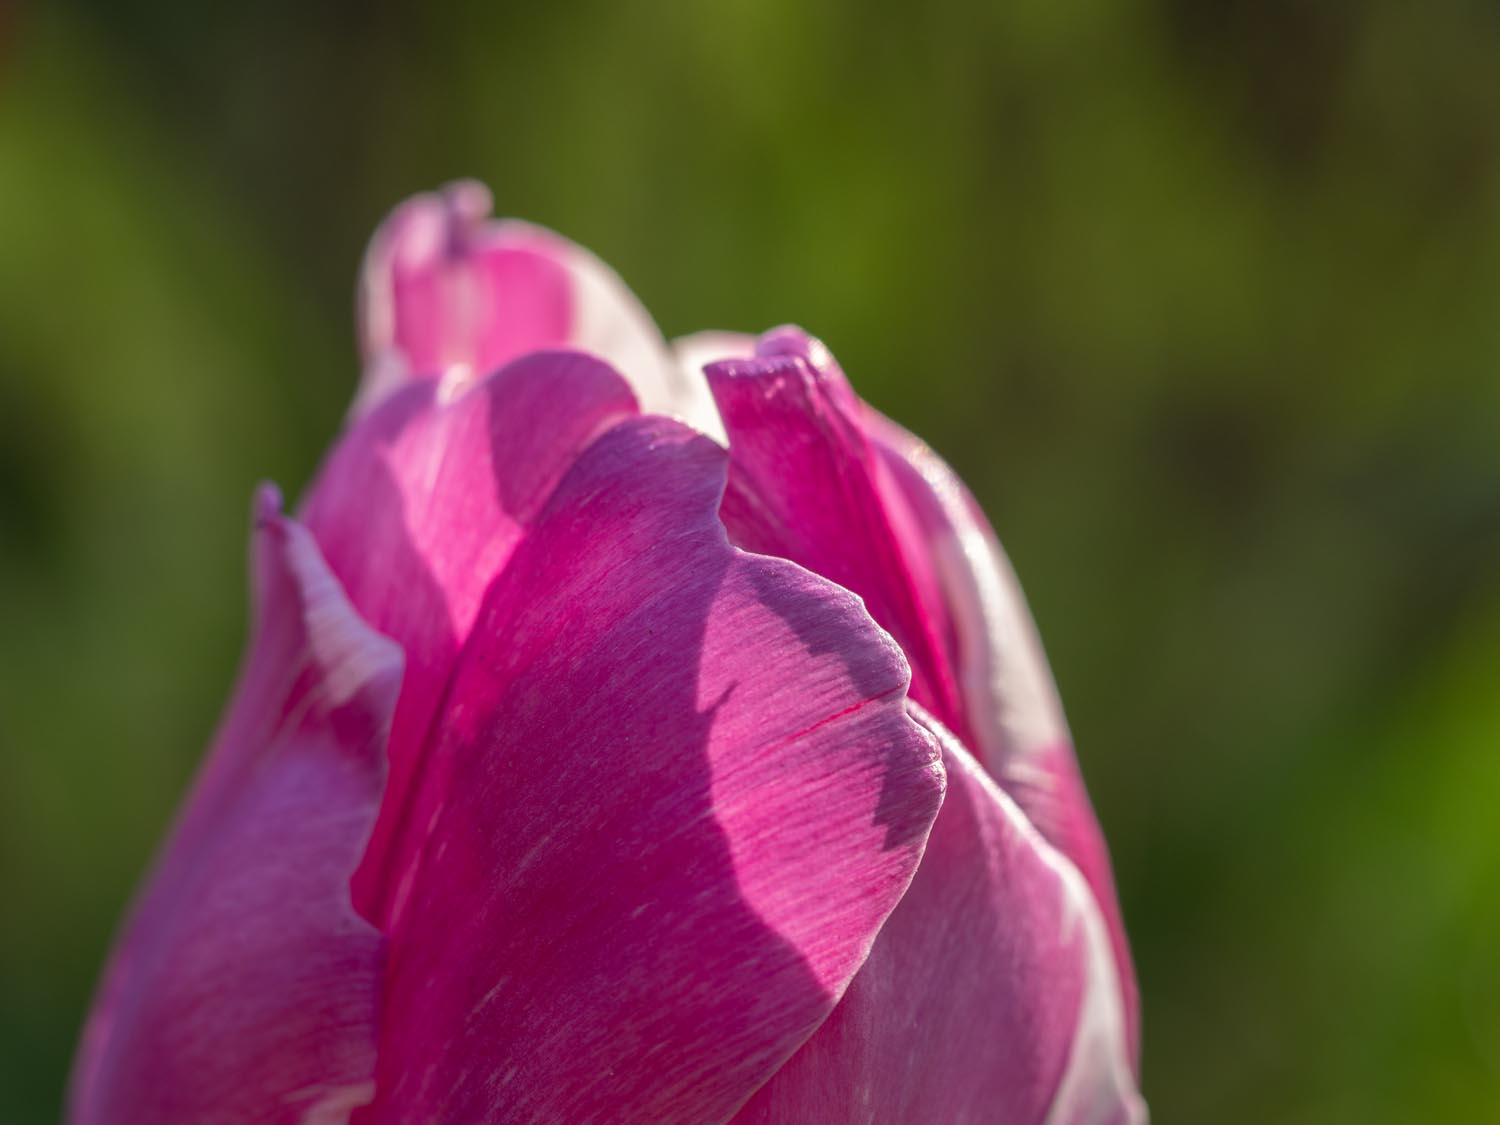 Tulpen: Anfang Mai 2019 im Burgenland